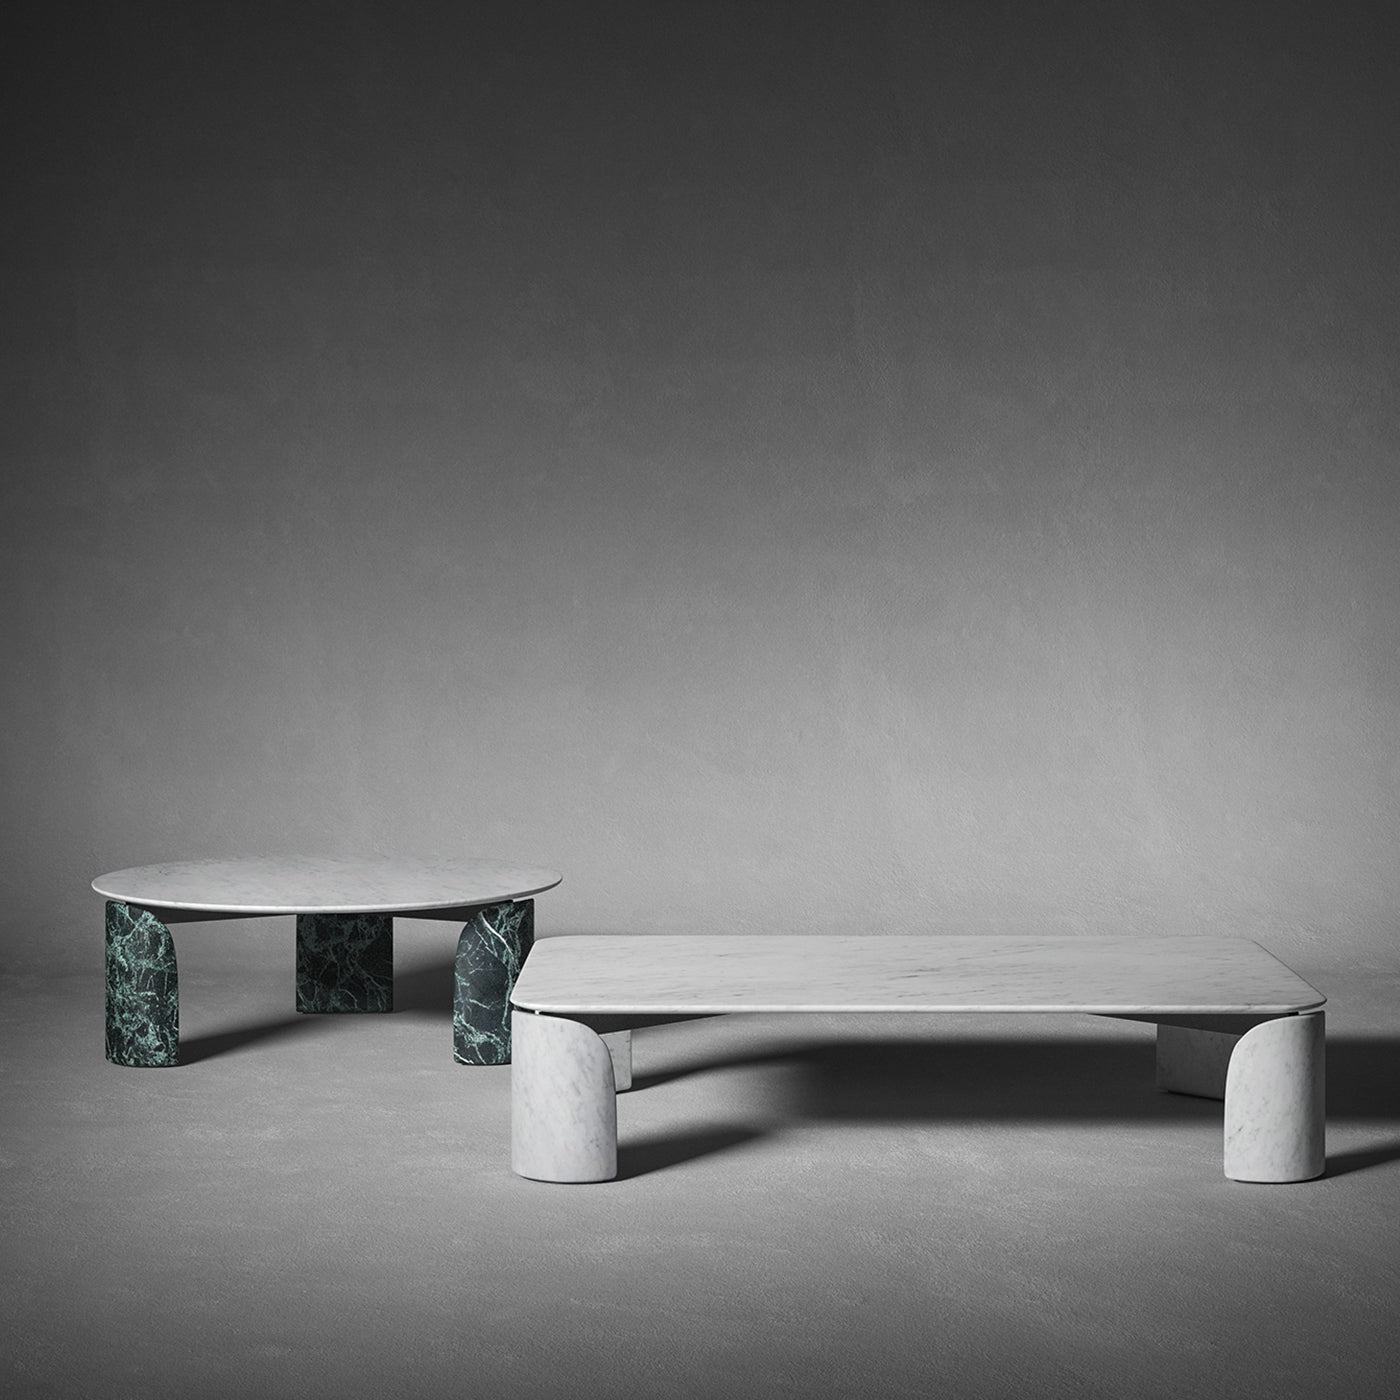 Taula White Carrara Rectangular Coffee Table - Alternative view 1